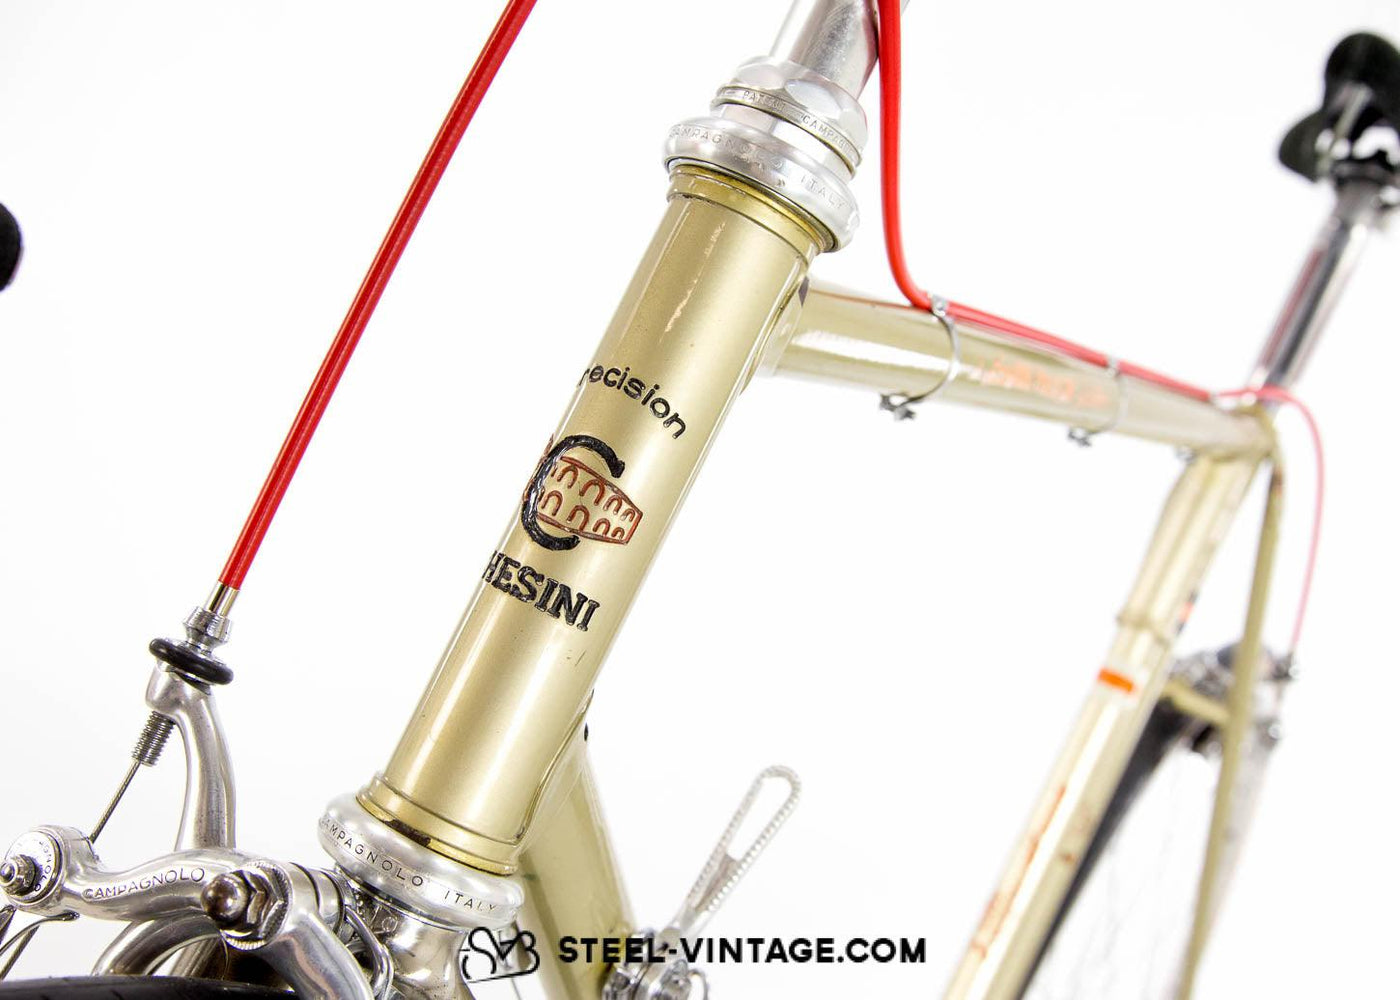 Chesini Professional Classic Road Bike 1976 - Steel Vintage Bikes